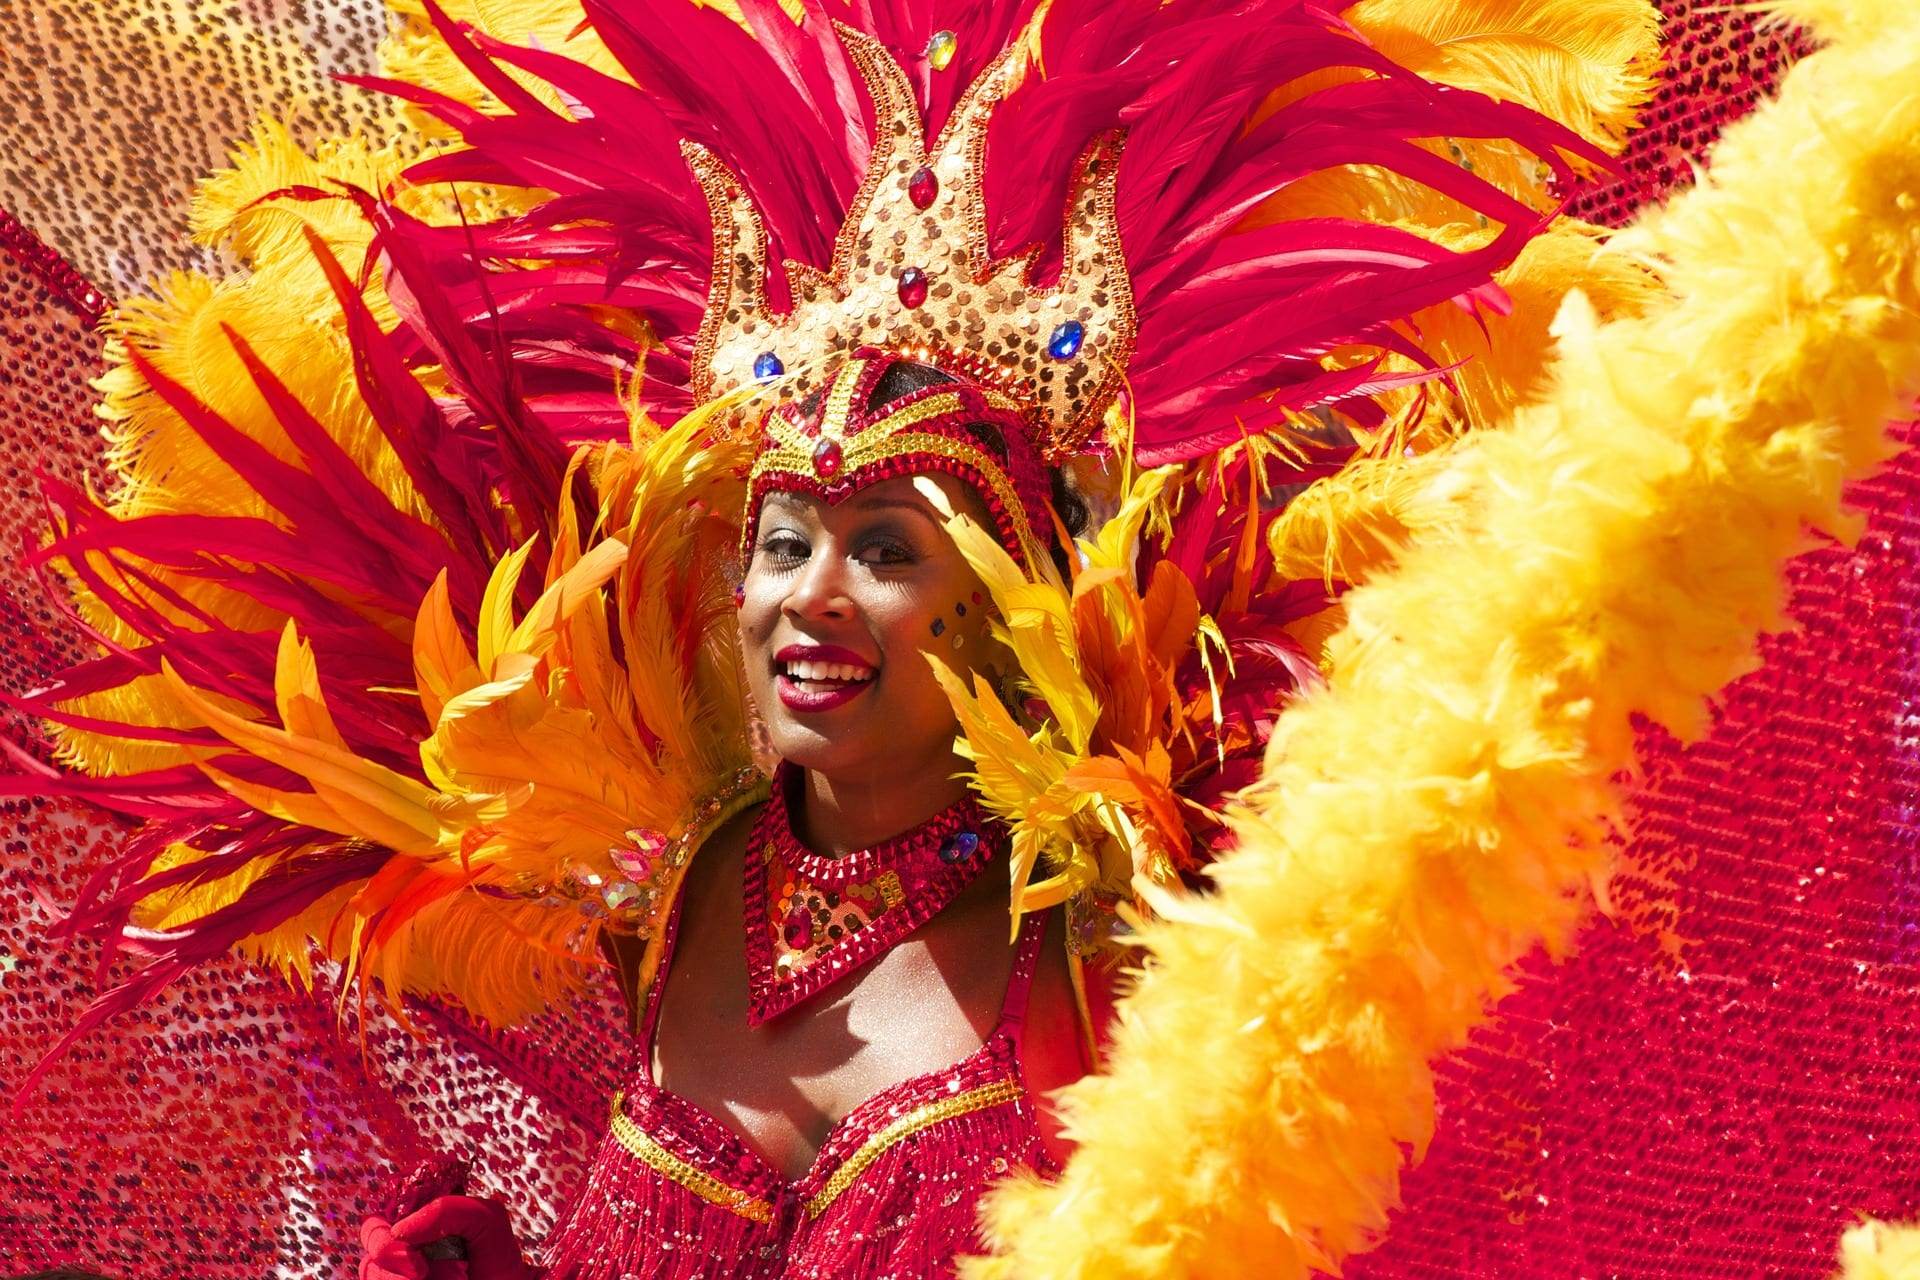 9 Caribbean carnival costumes ideas  carnival costumes, caribbean carnival,  carnival